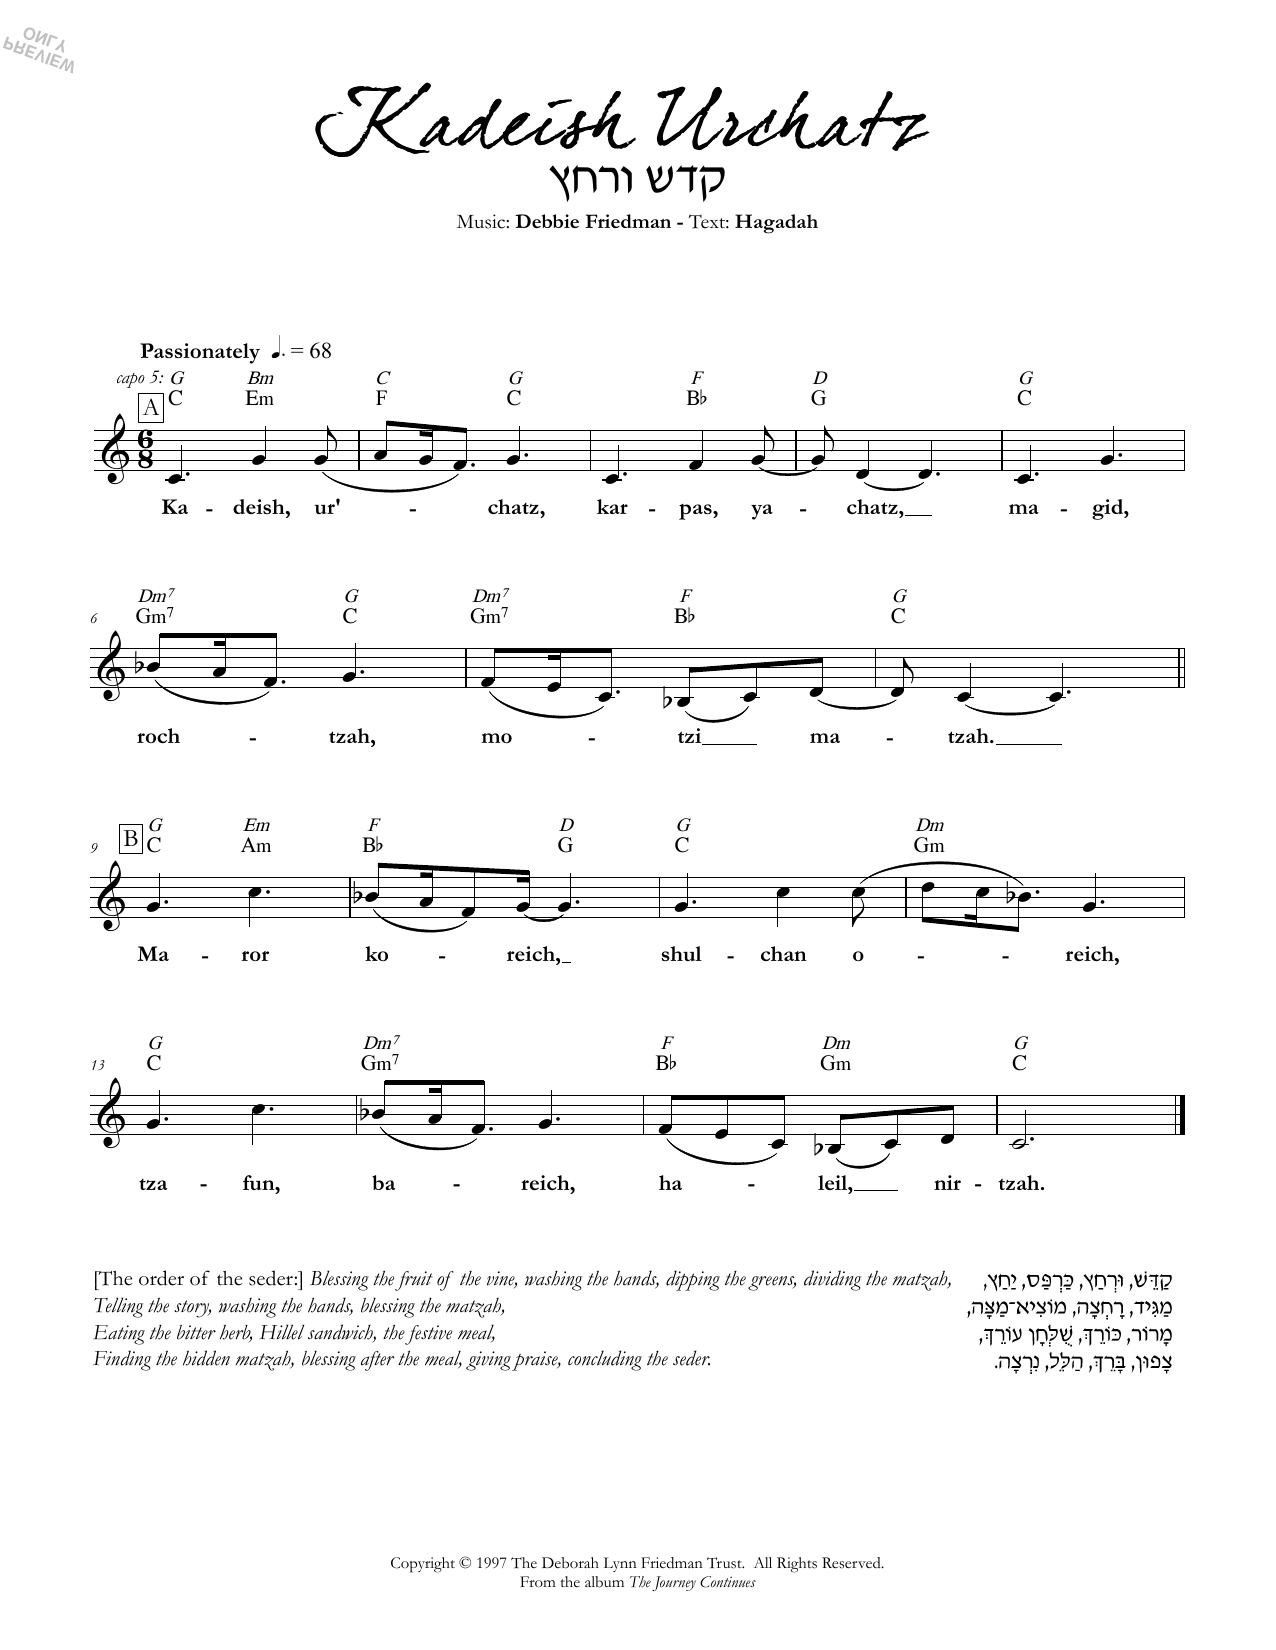 Debbie Friedman Kadeish Urchatz sheet music notes and chords arranged for Lead Sheet / Fake Book